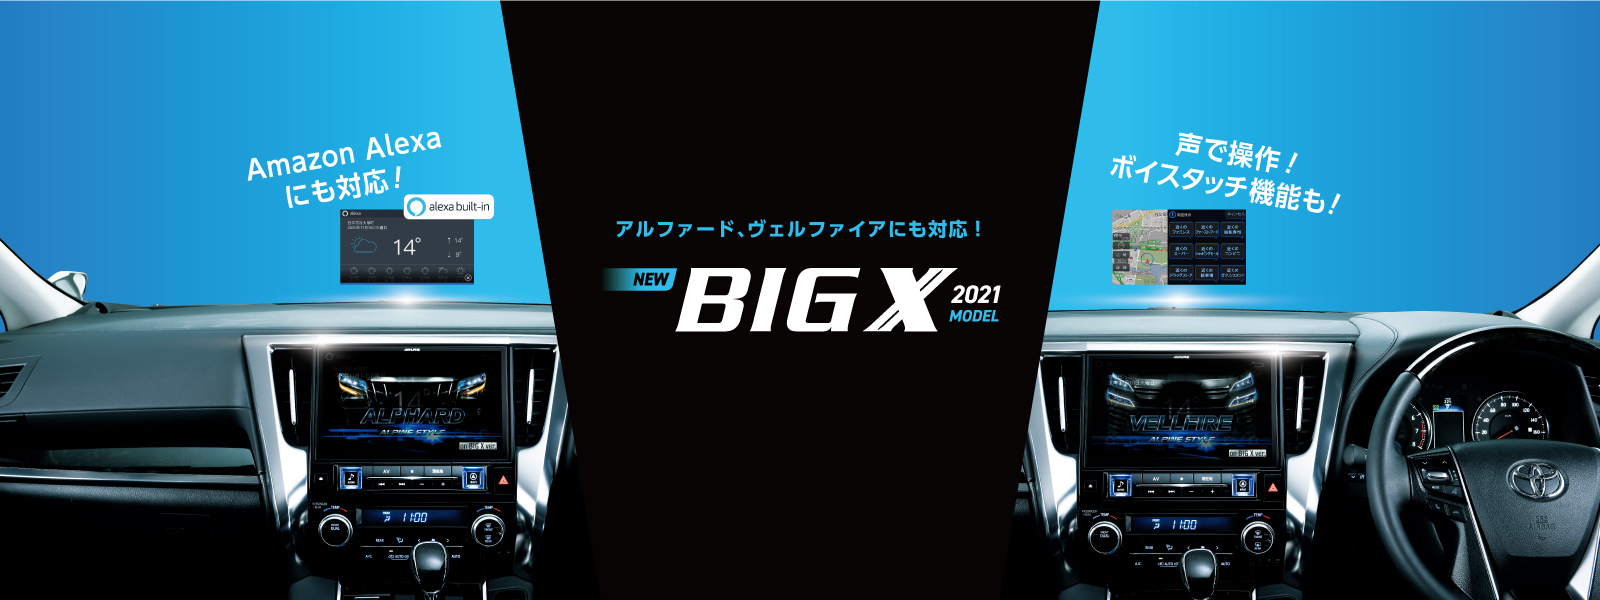 BIGX 2021 MODEL